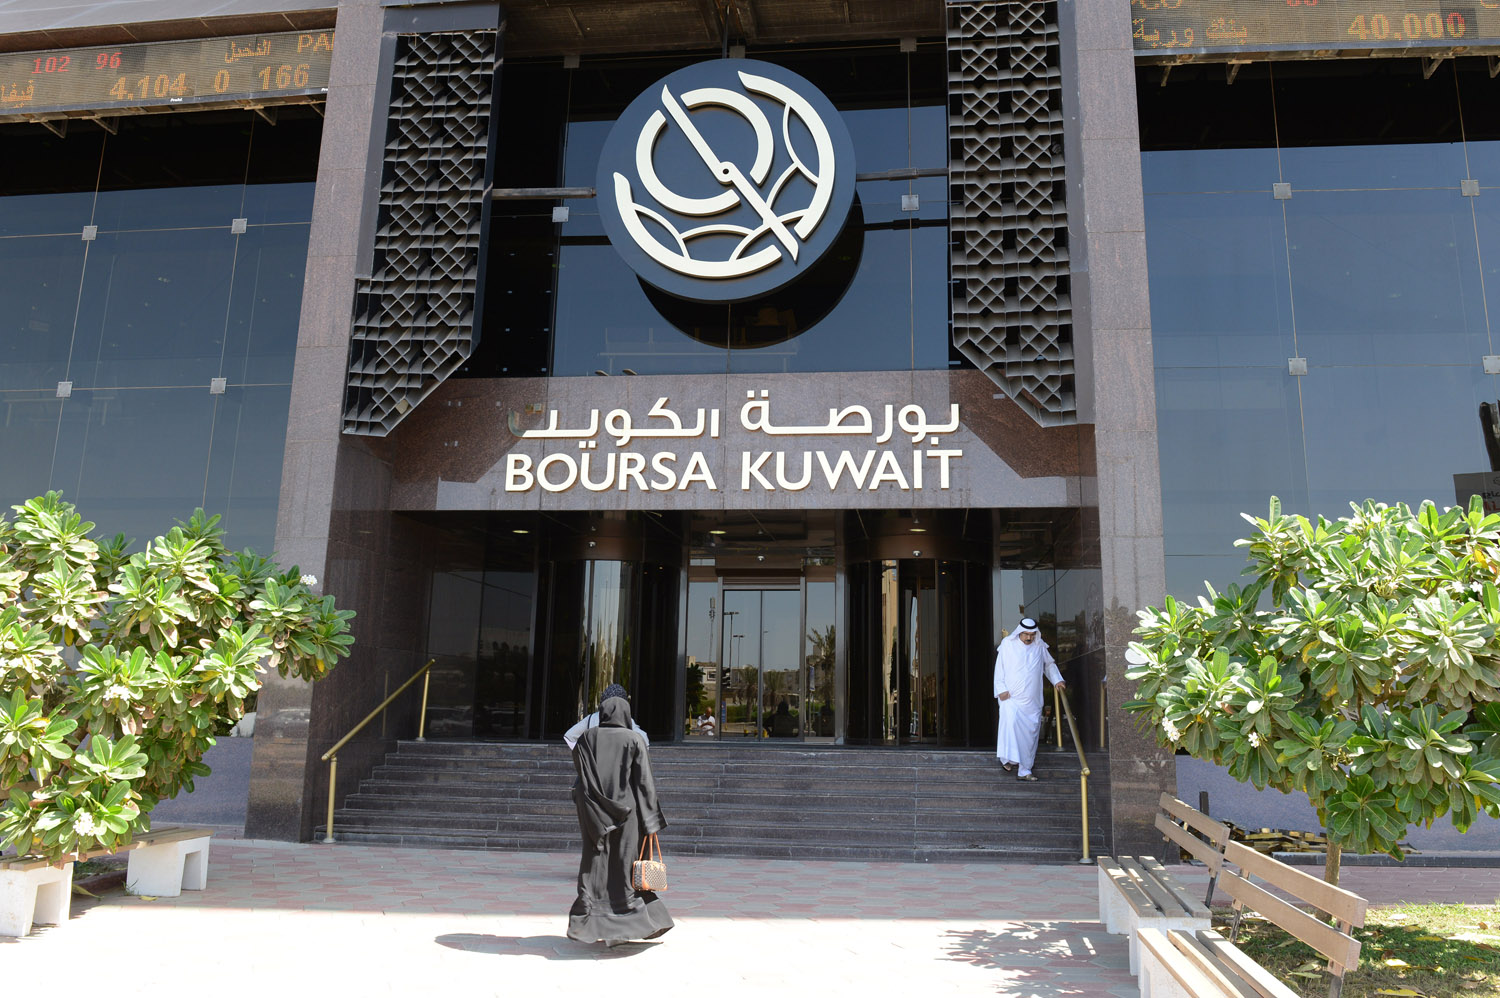 Kuwait Bourse